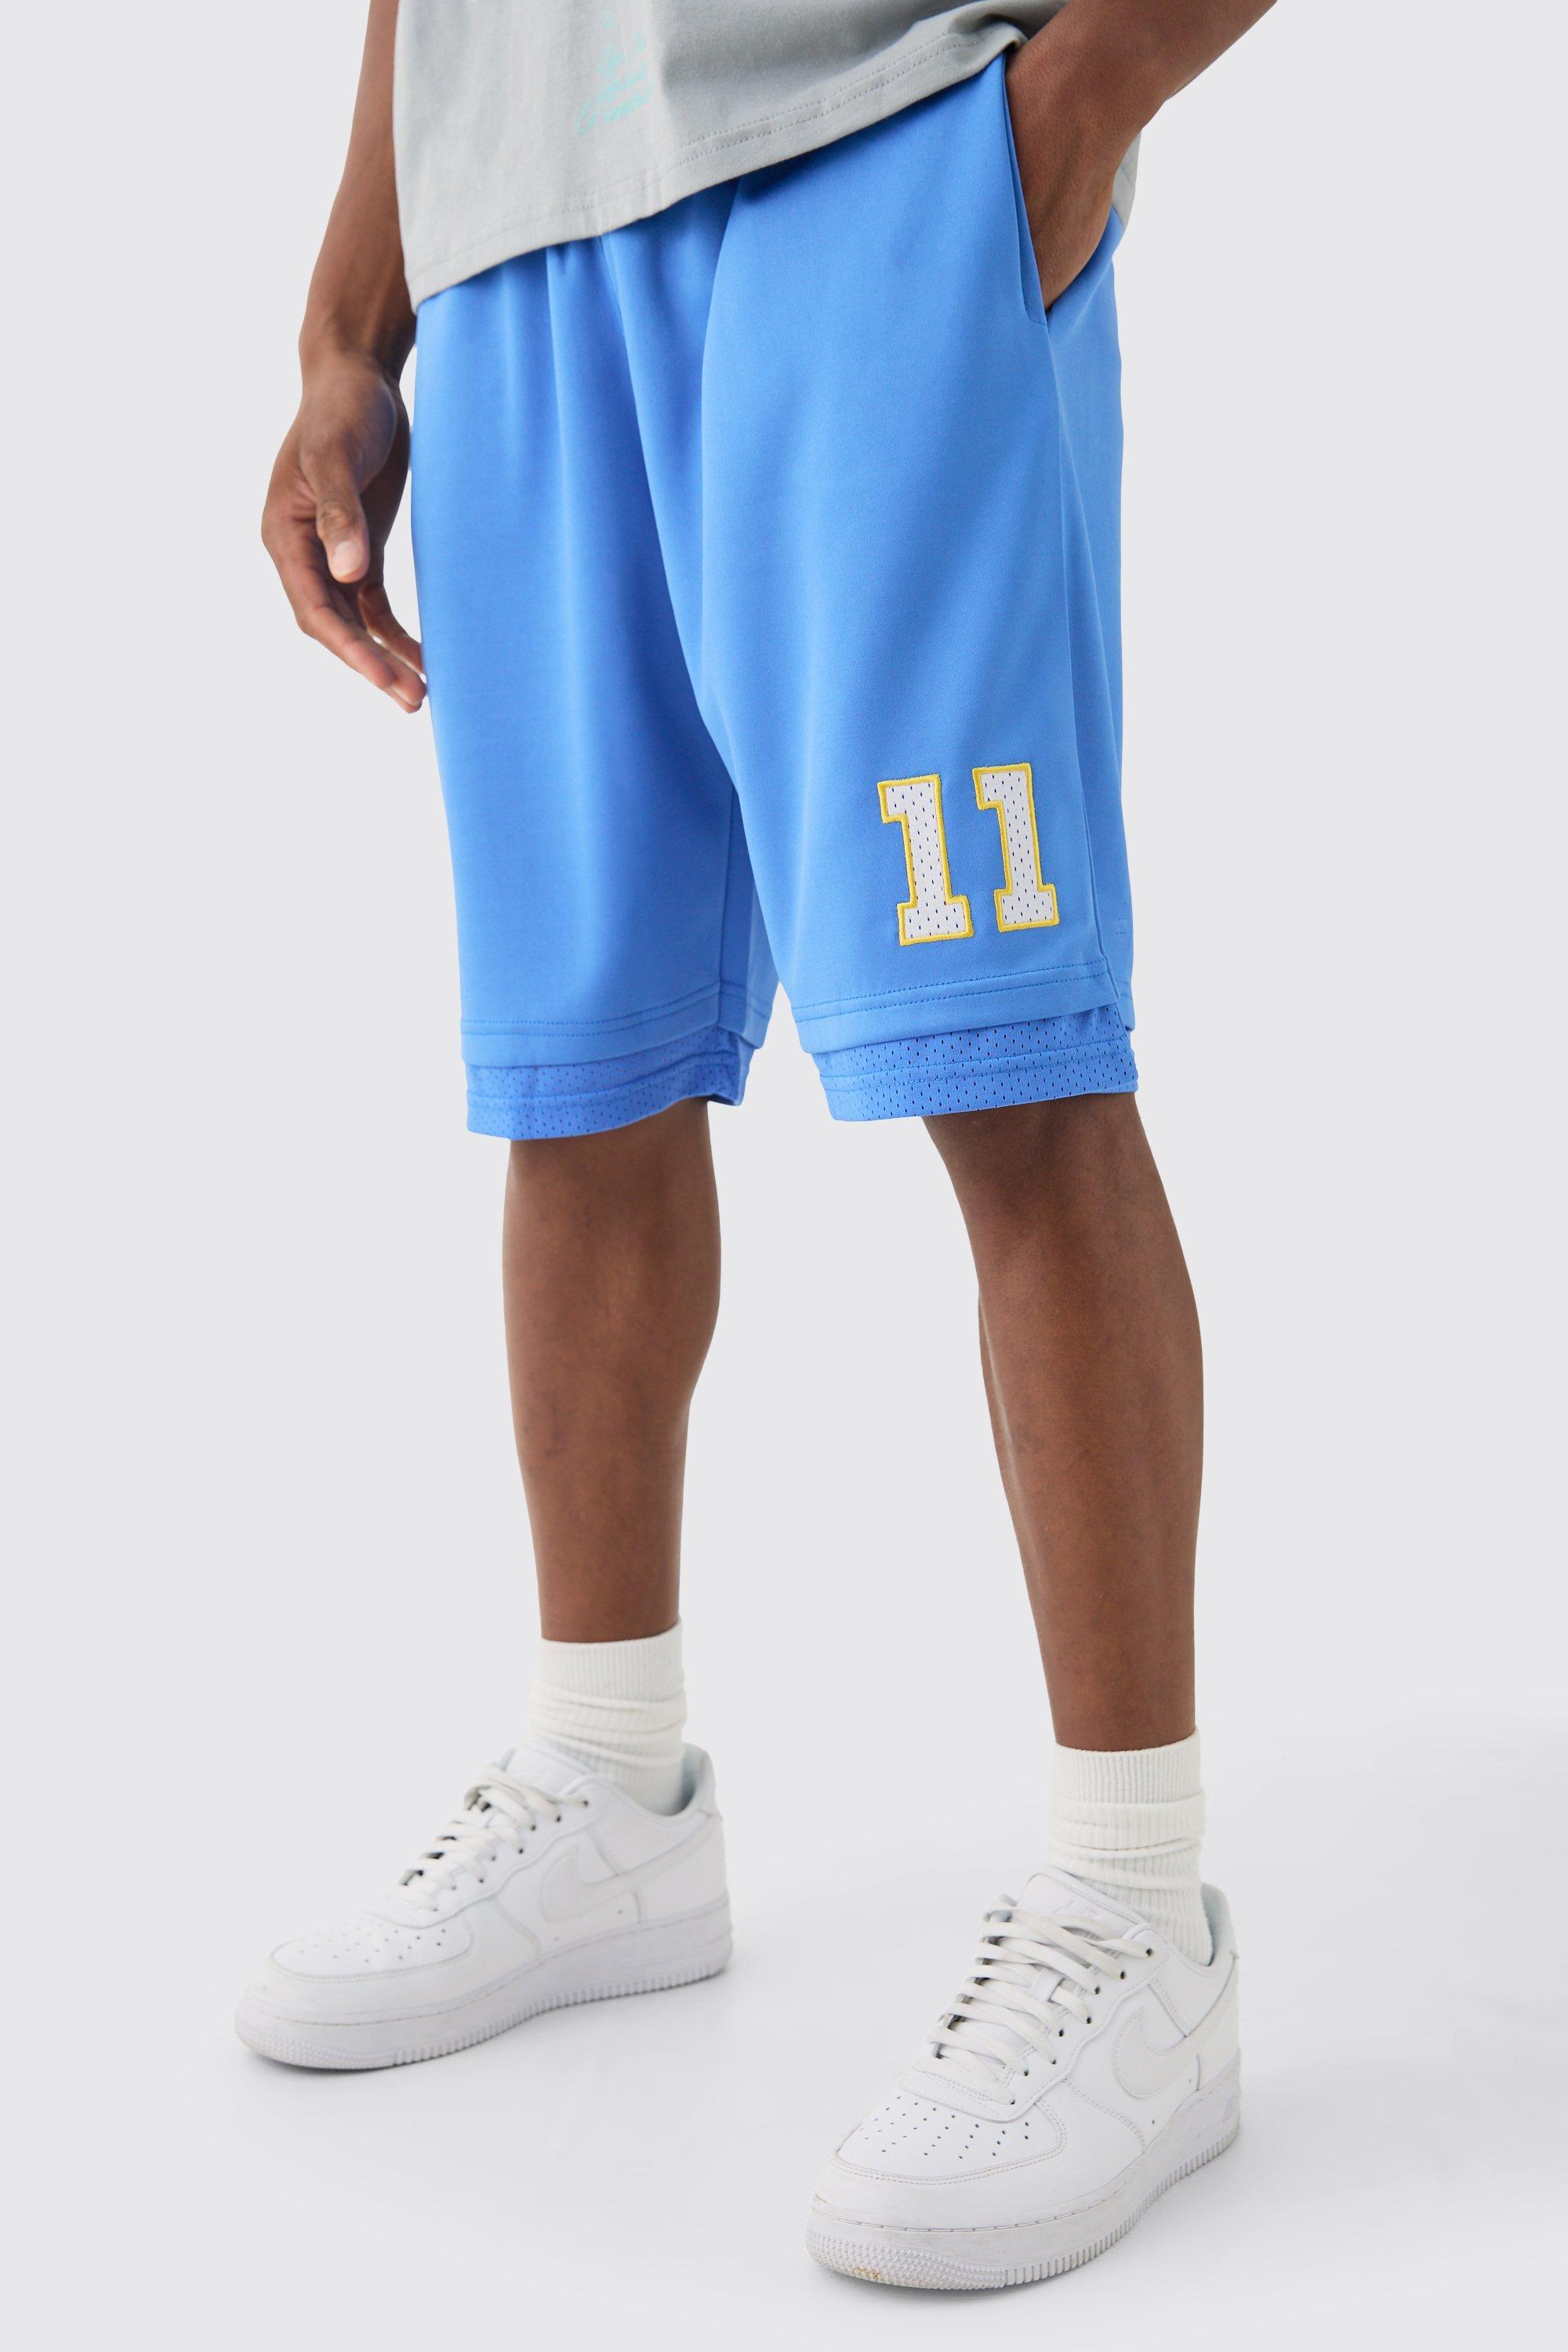 Image of Loose Fit Bhm Satin Mesh Long Length Basketball Shorts, Azzurro